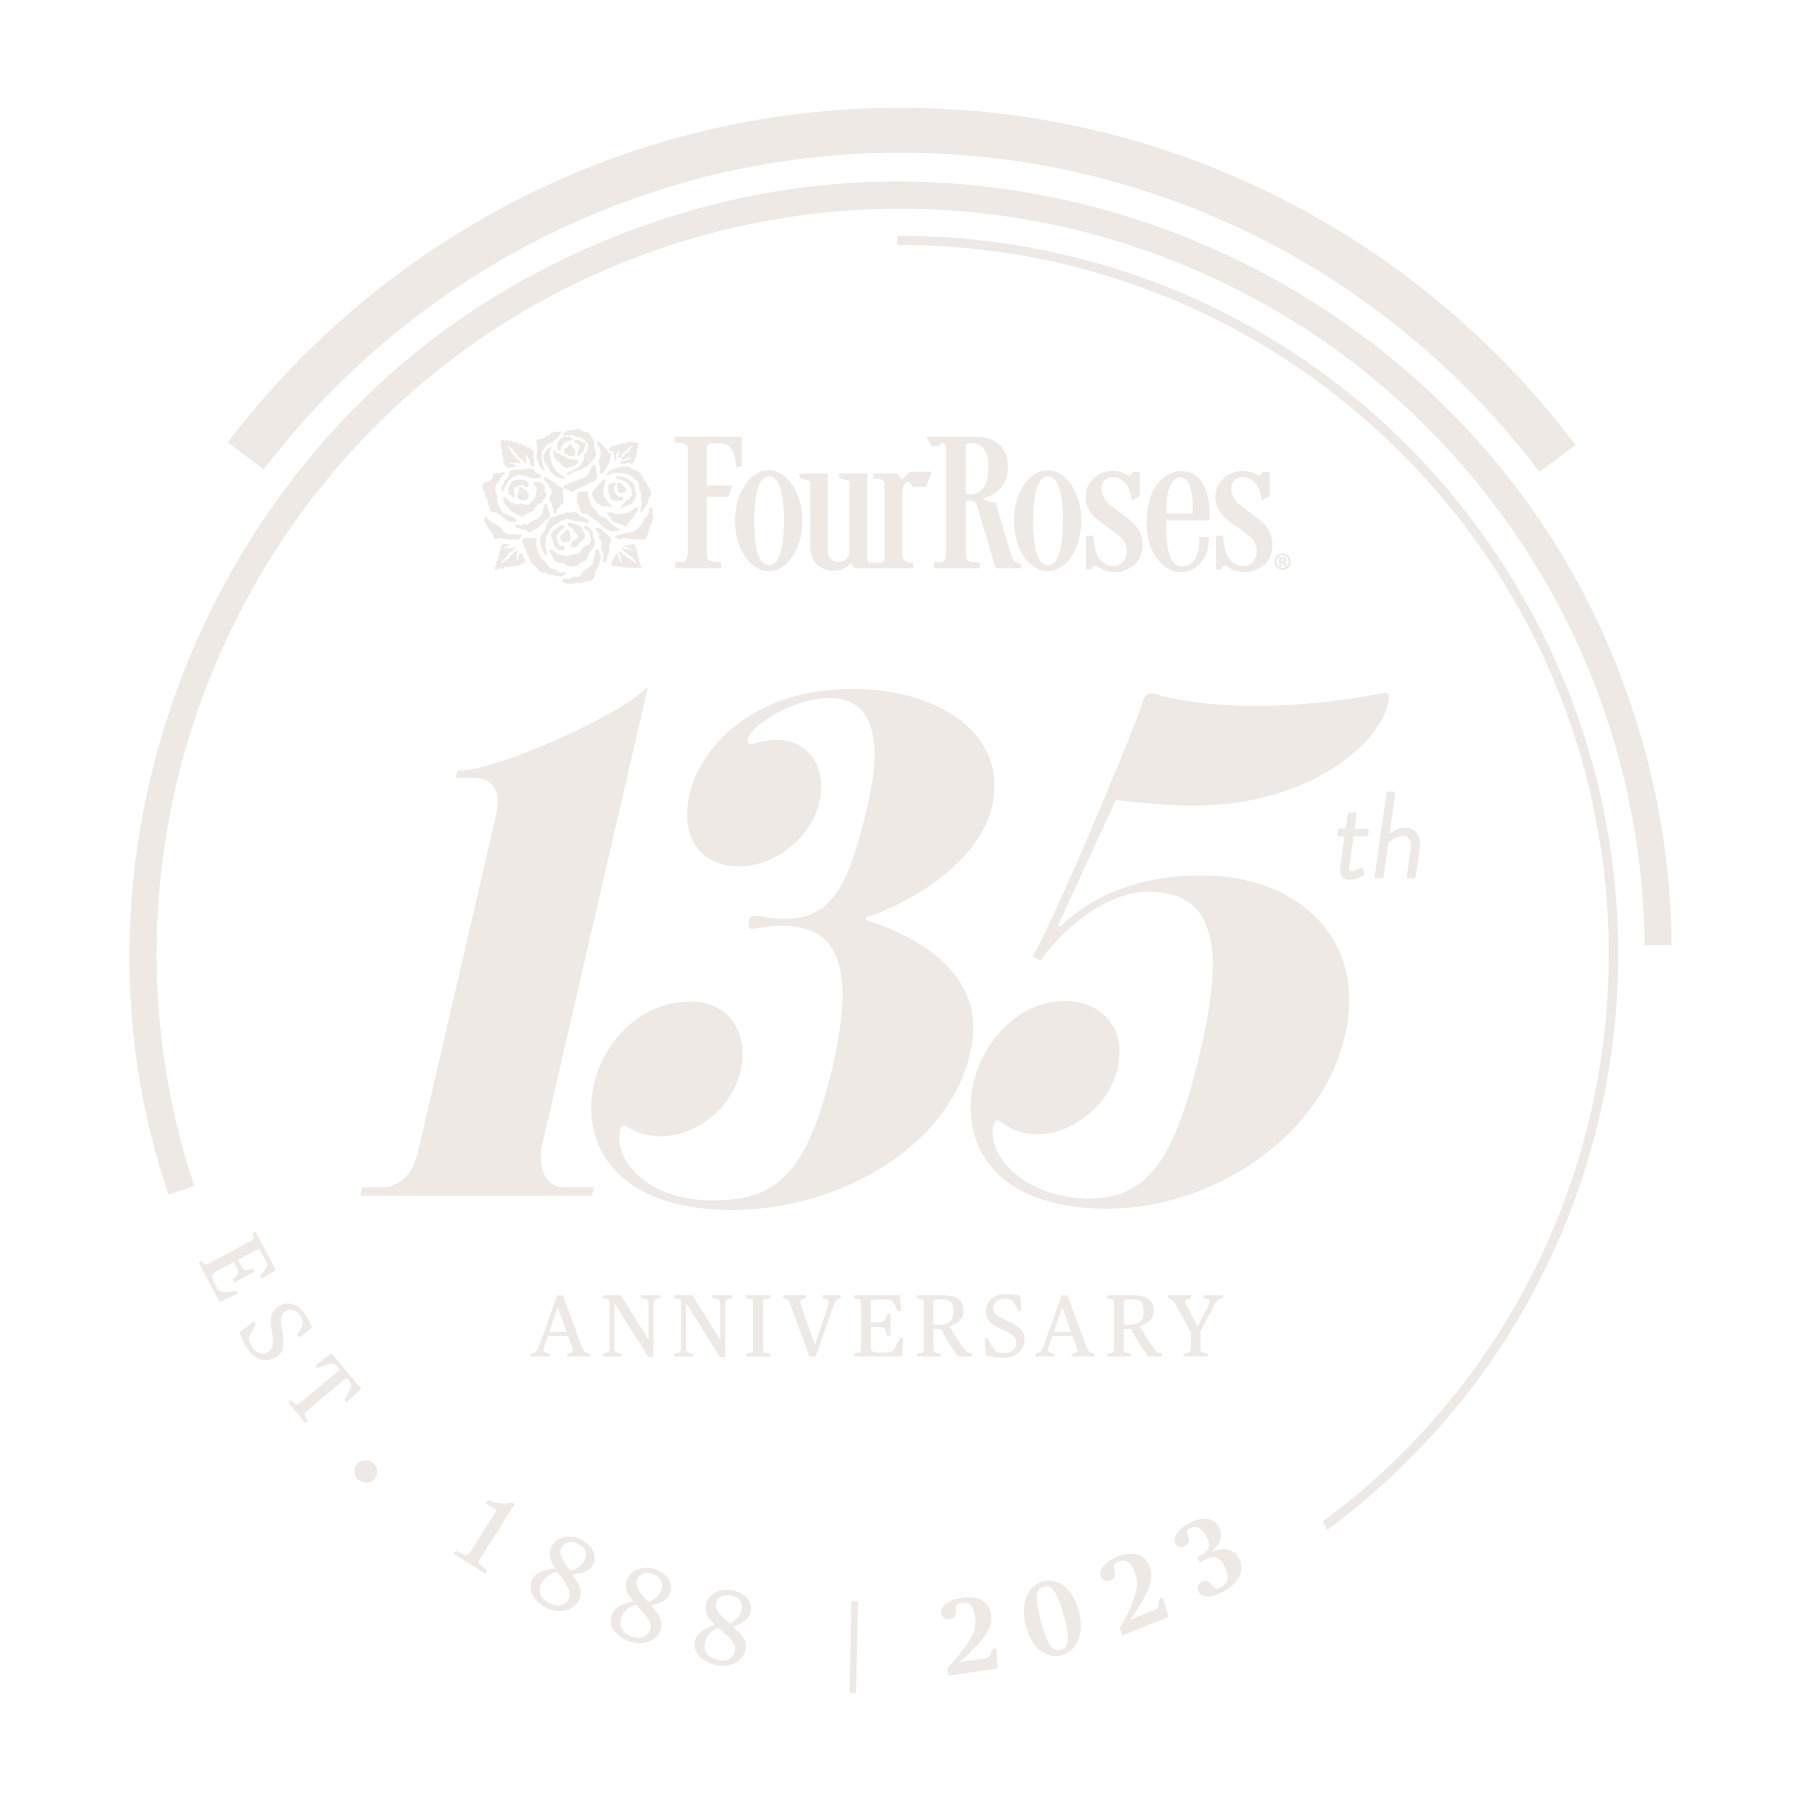 Four Roses 135 Anniversary Logo